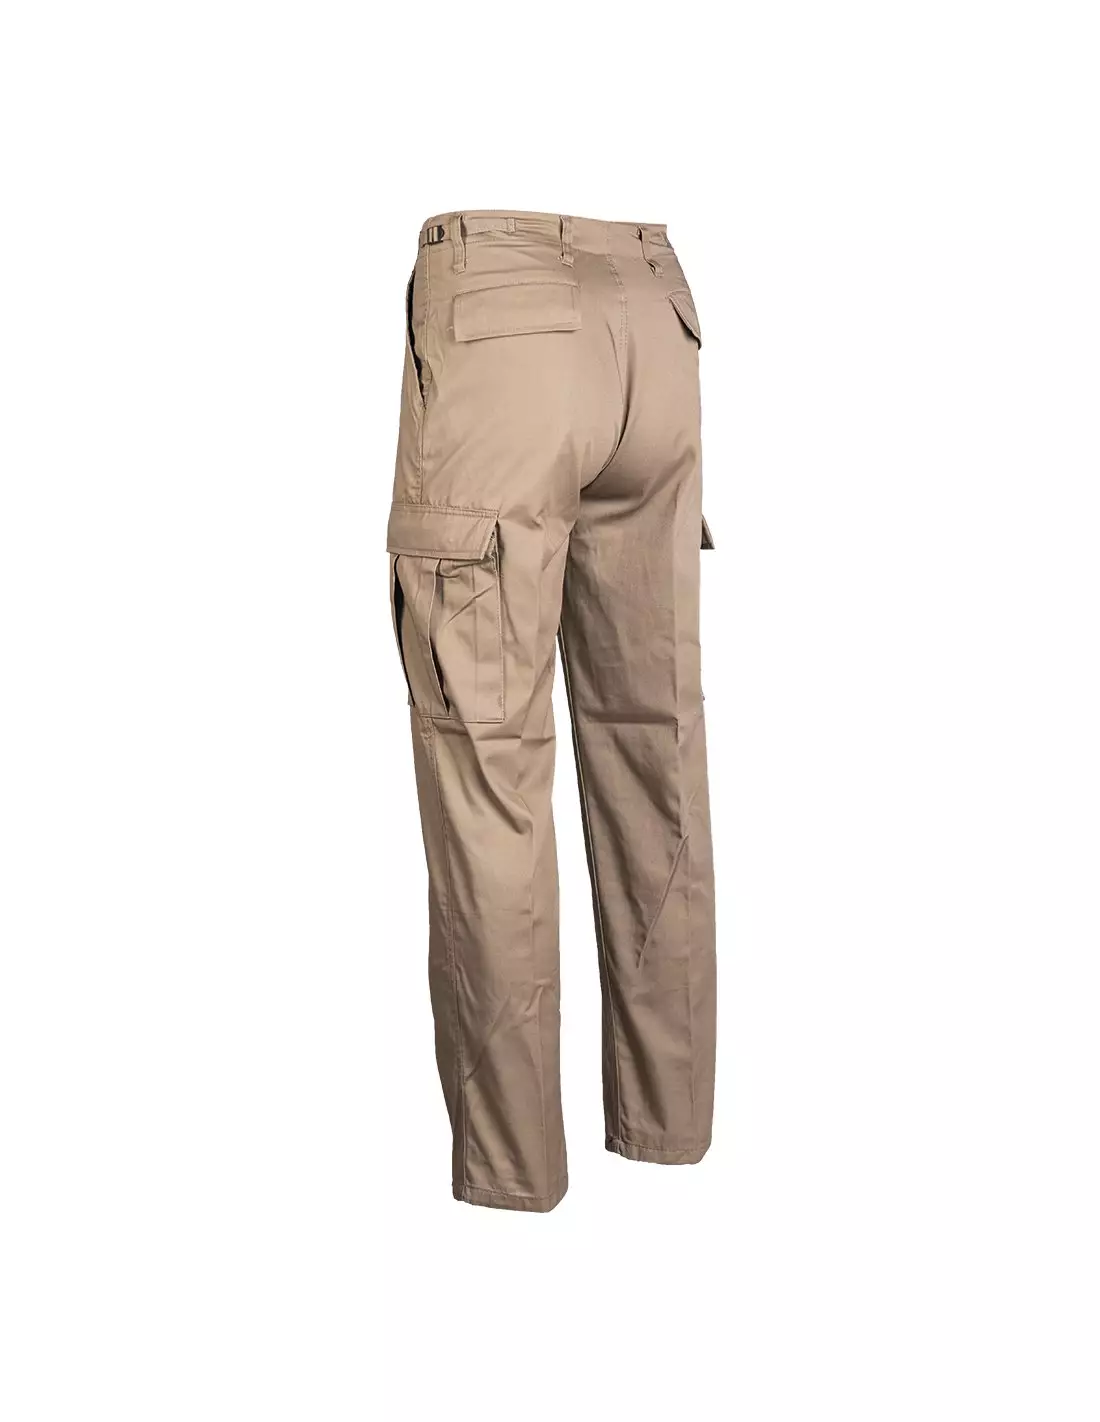 BDU Ranger combat pants of Mil-Tec. khaki military trousers